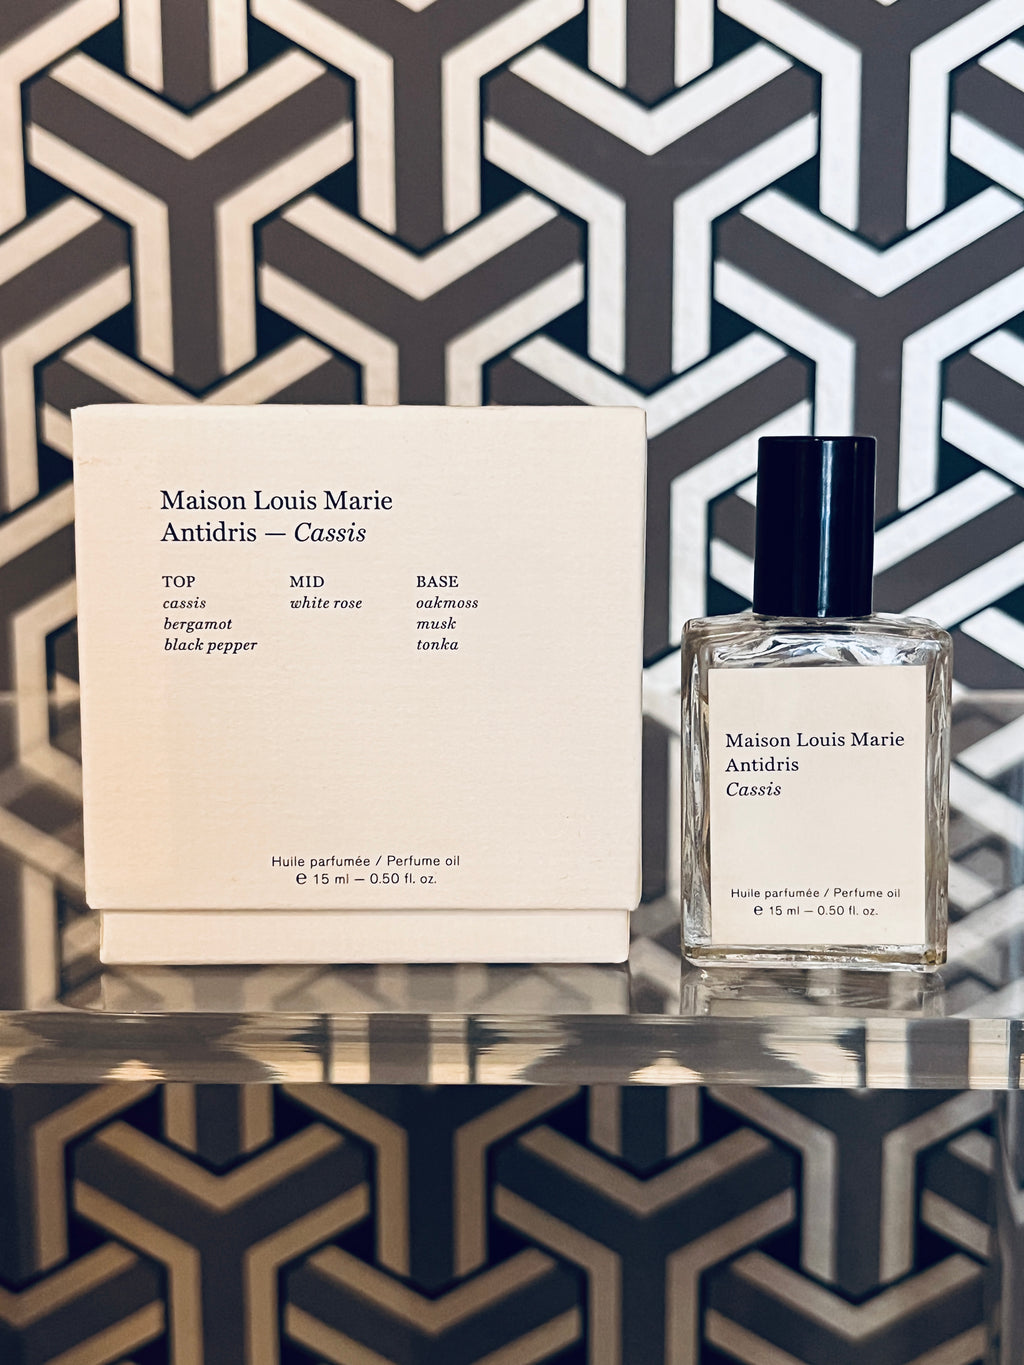 Maison Louis Marie Perfume Oil - Antidris Cassis